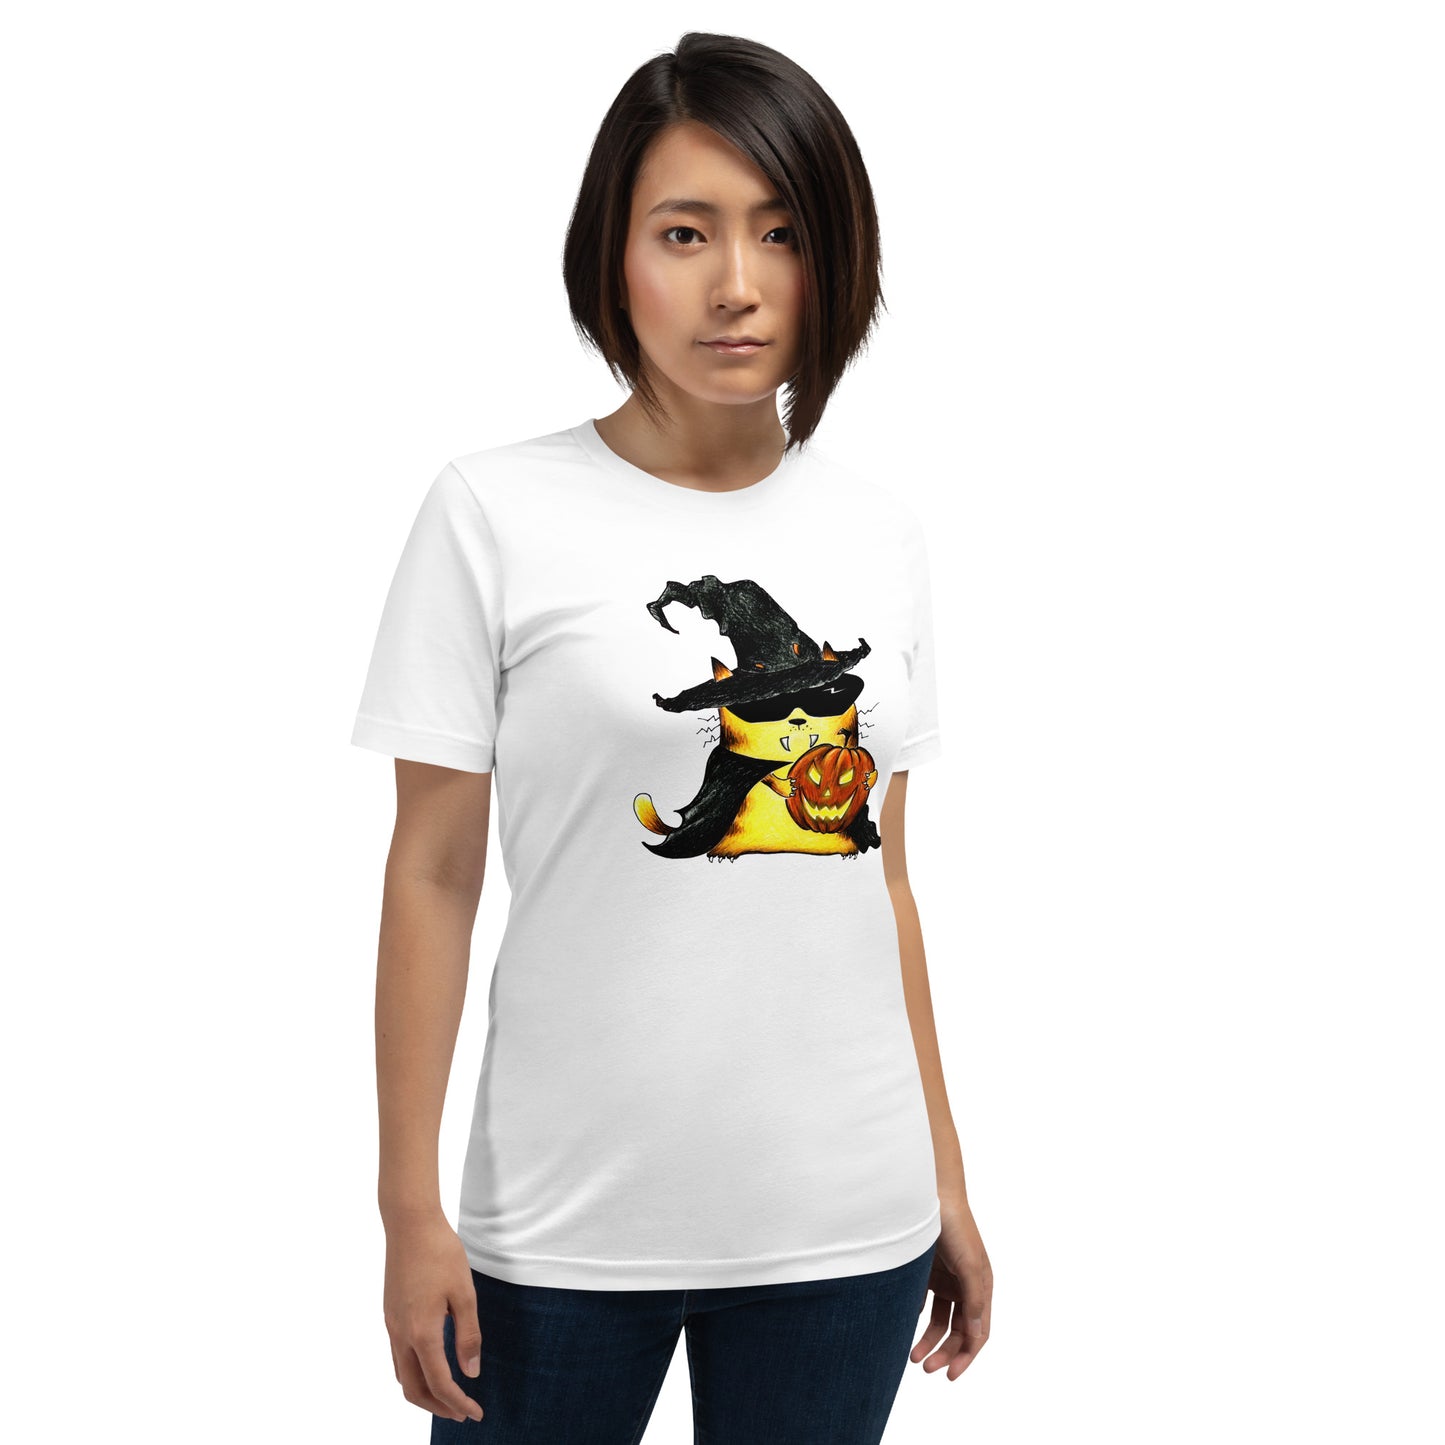 Ladies T-shirt "Cat and Pumpkin"